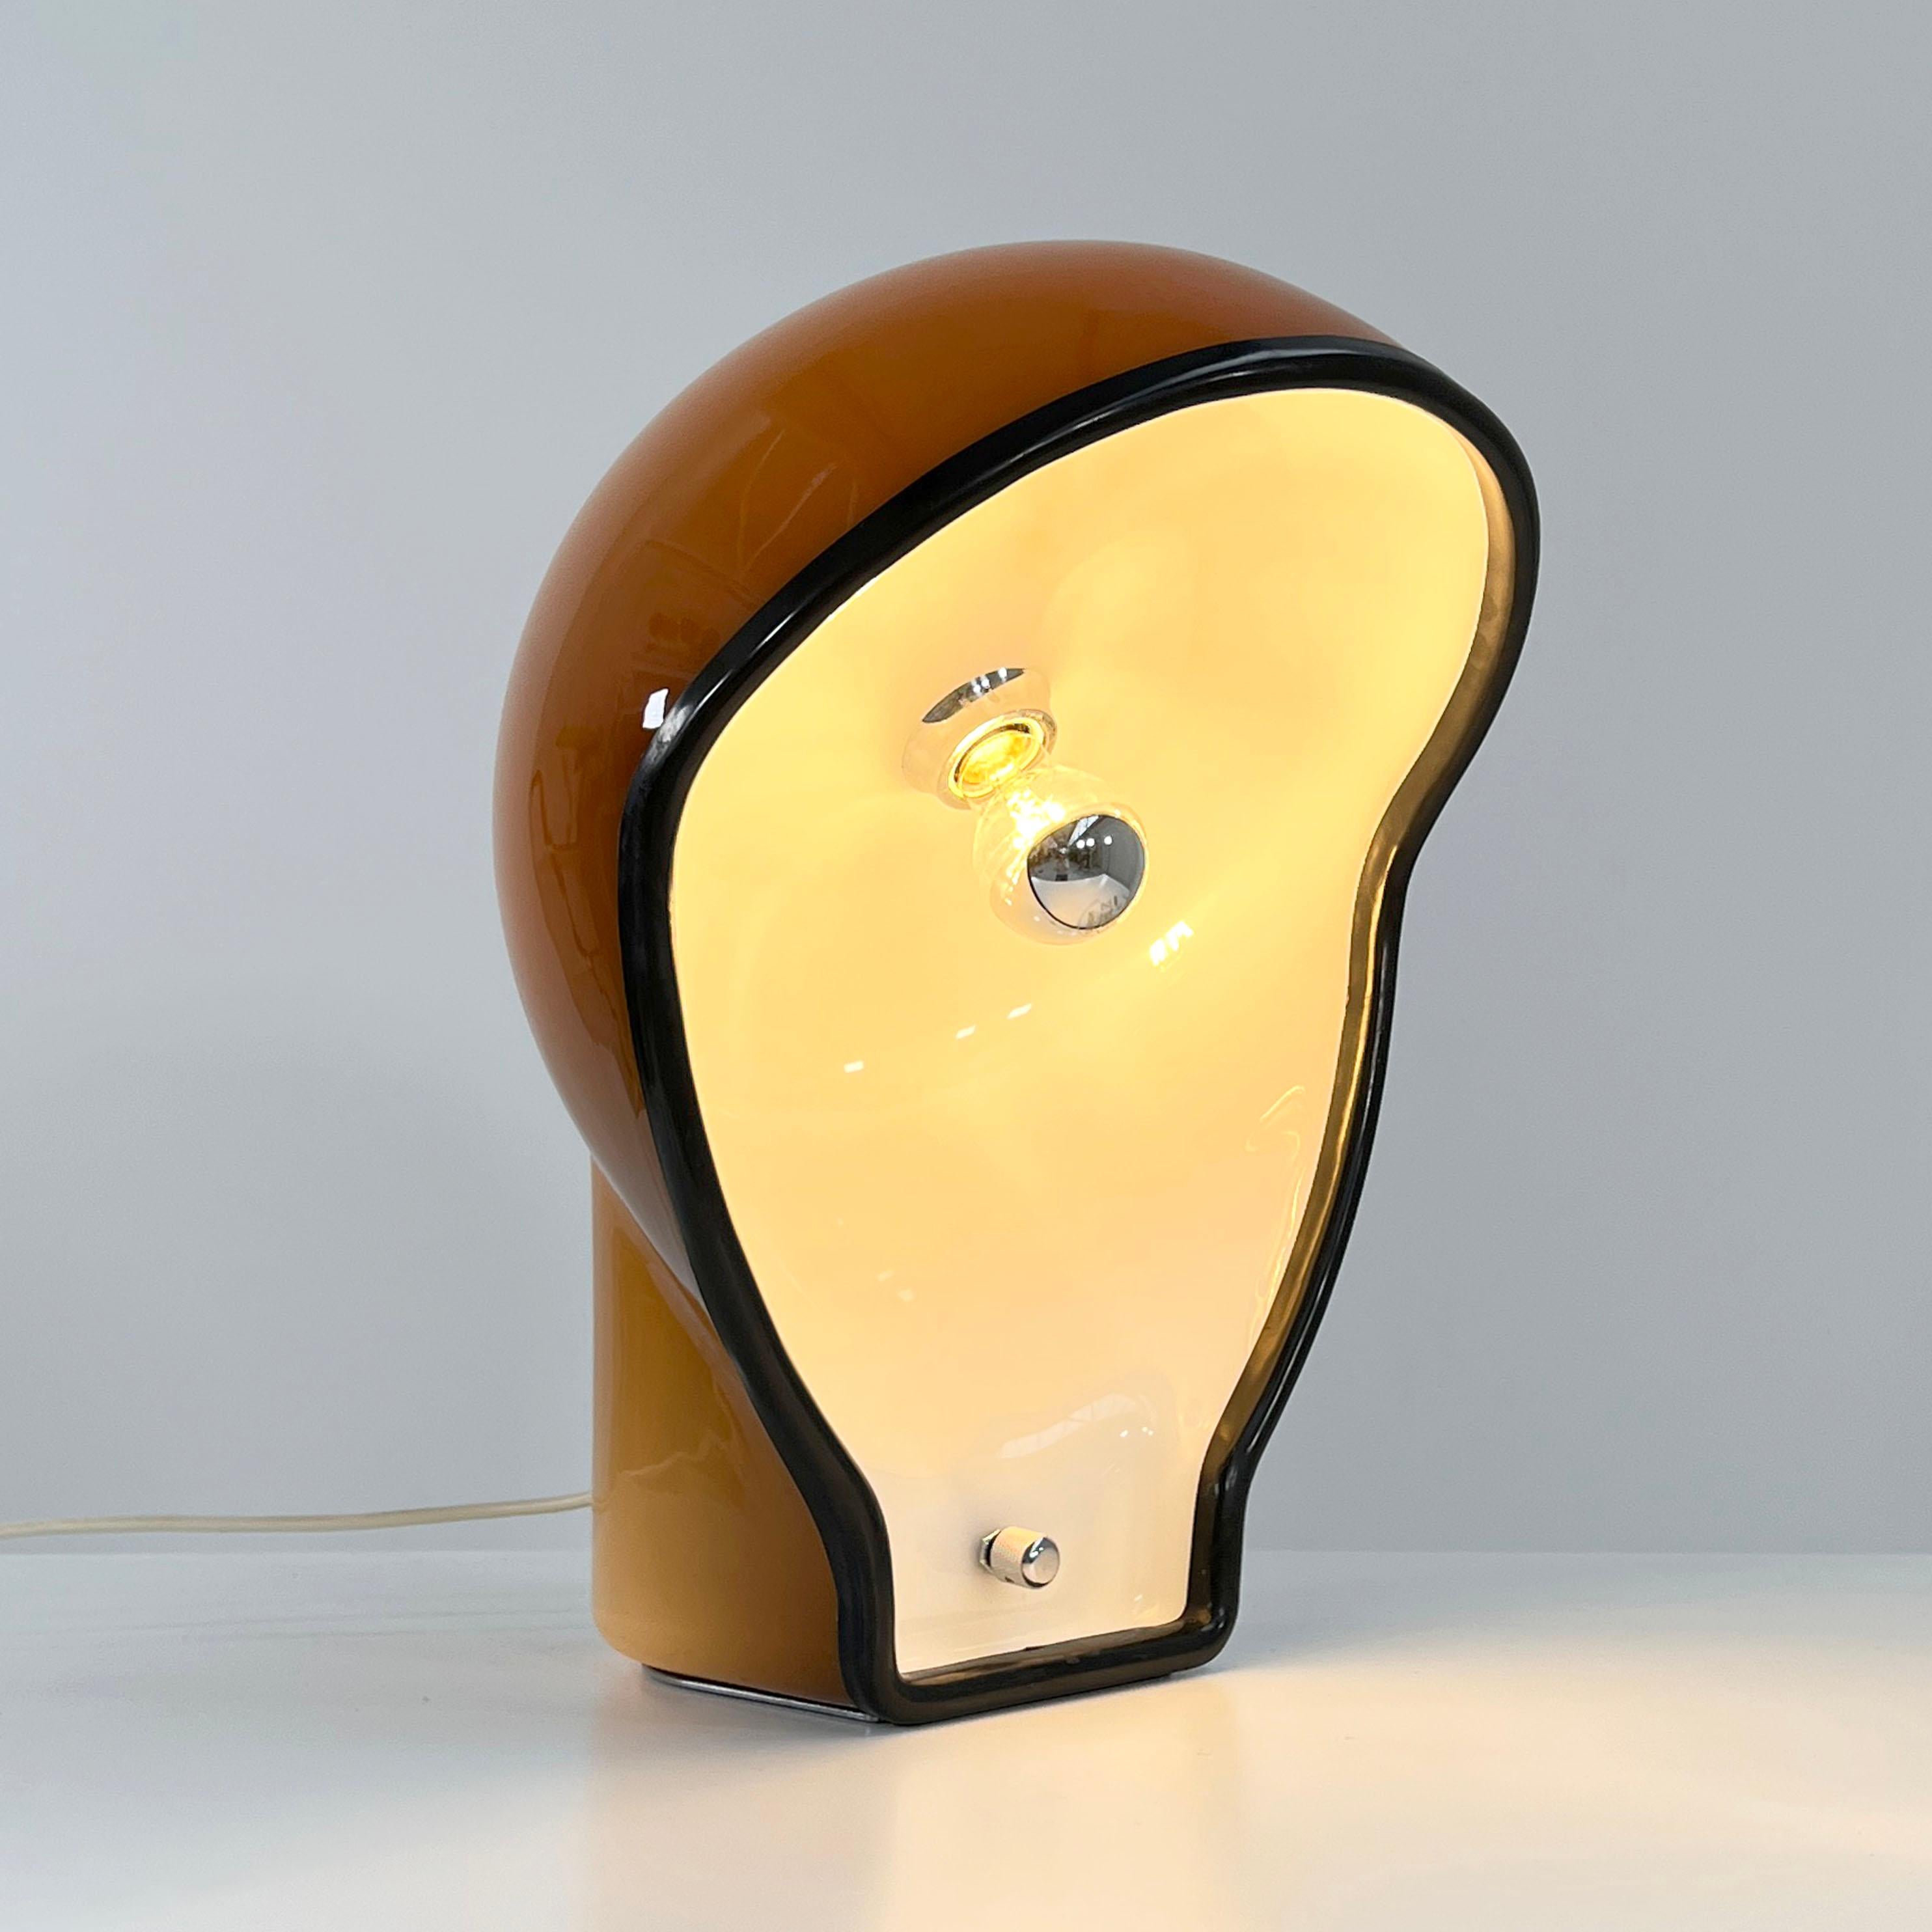 Designer - Fabio Lenci
Producer - Harvey Guzzini
Model - Birghitta Table Lamp 
Design Period - Seventies
Measurements - Width 40 cm x Depth 33 cm x Height 47 cm 
Materials - Plastic, Metal
Color - Brown, White, Black, Silver
Light wear